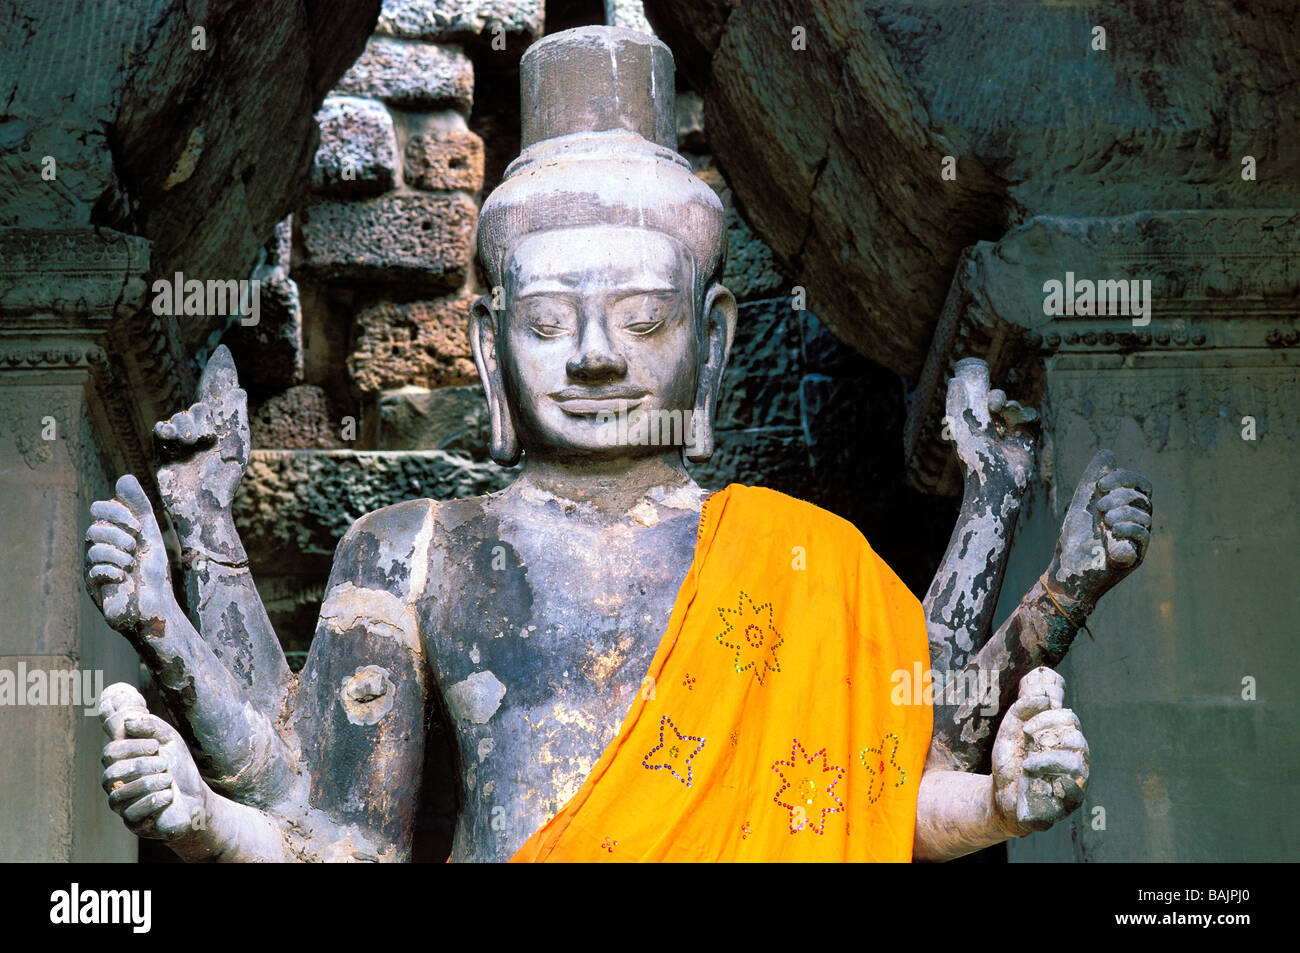 Kambodscha, Provinz Siem Reap, Angkor Website Weltkulturerbe der UNESCO, Angkor Wat Tempel, Gott Vishnu statue Stockfoto